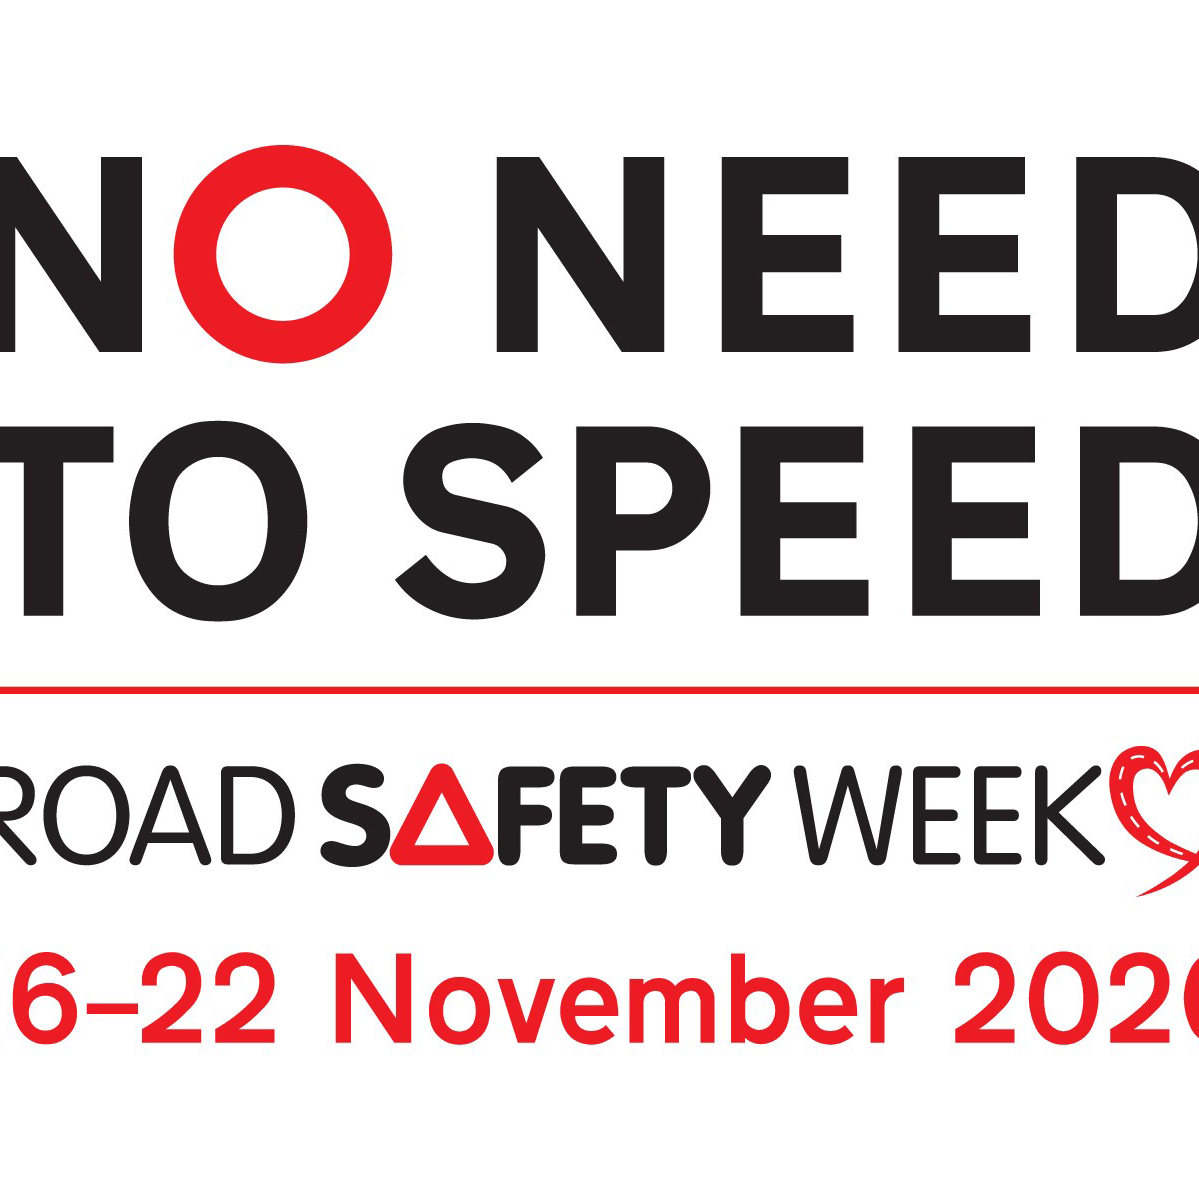 Road Safety Week 2020